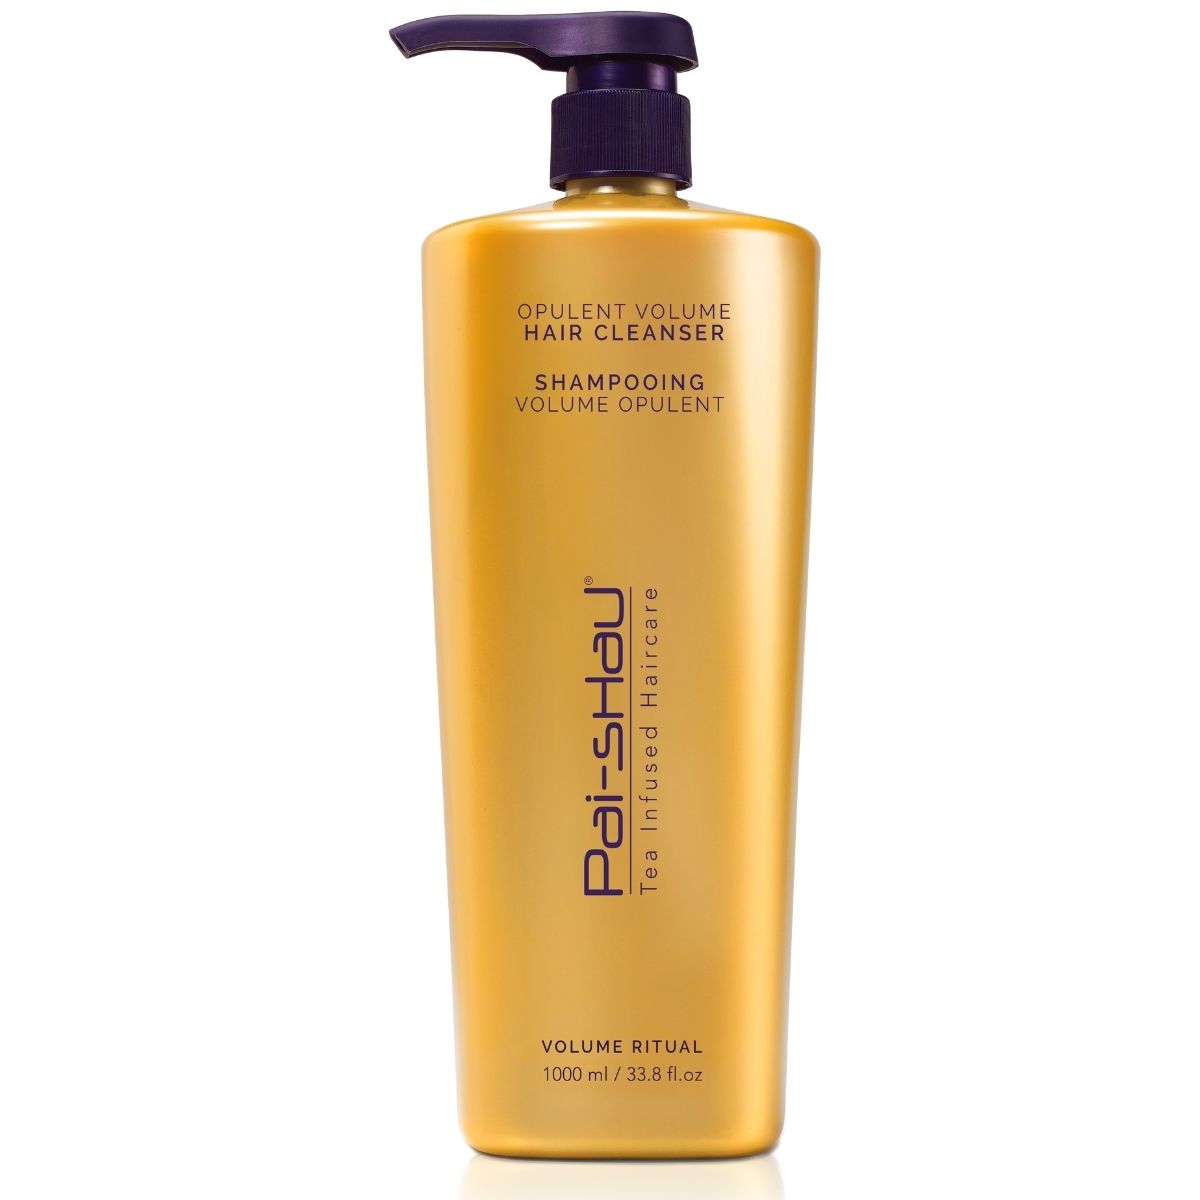 opulent volume hair cleanser (shampoo de cabello)